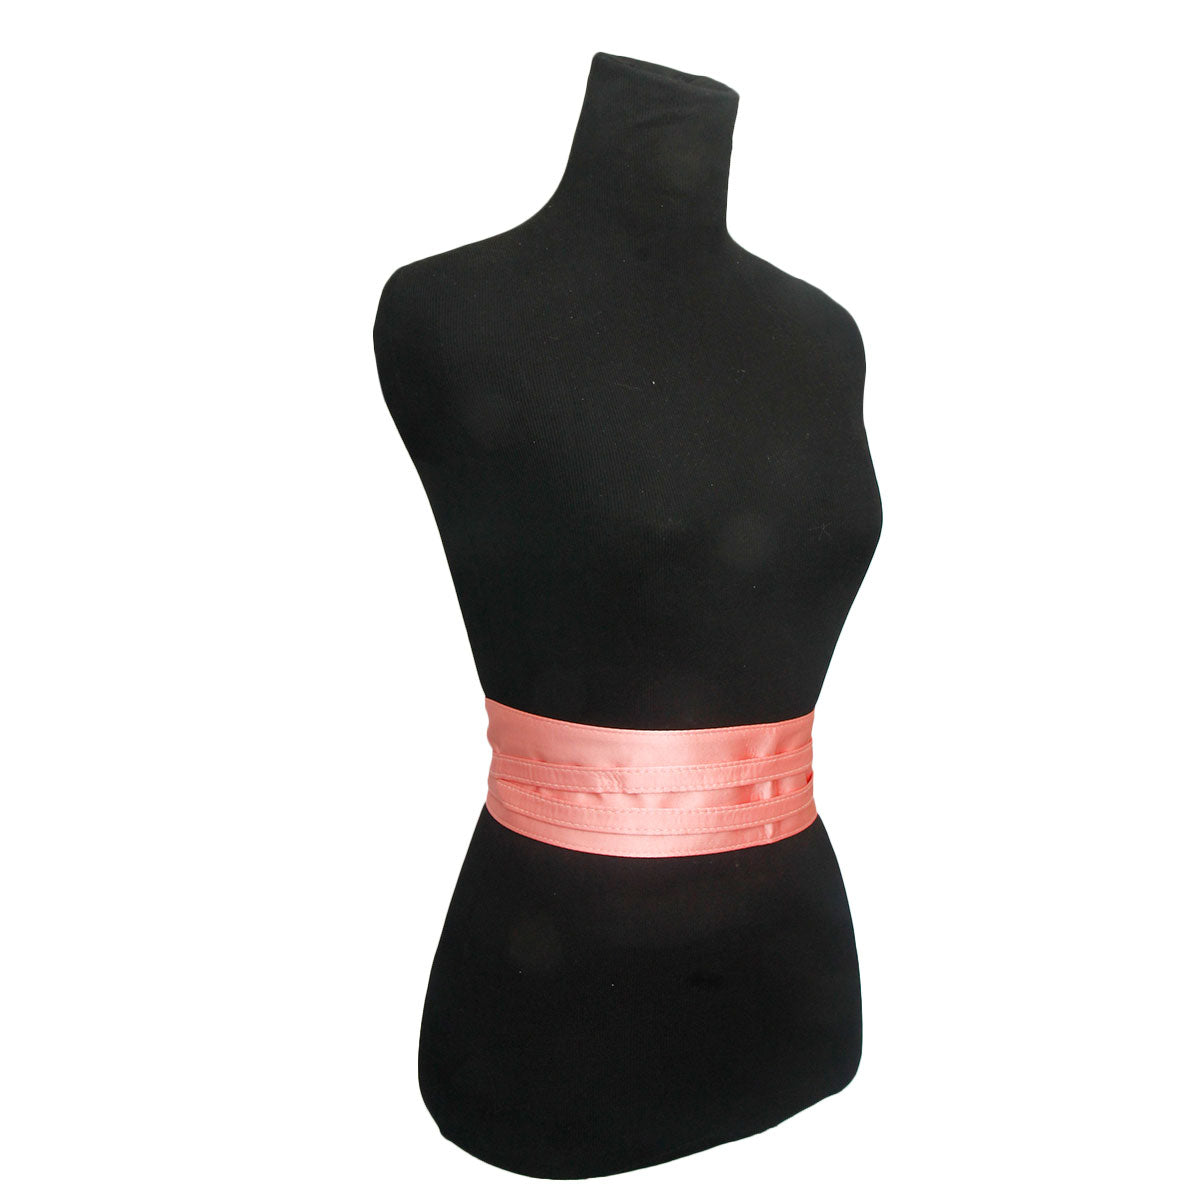 Pink Satin Wrap Belt